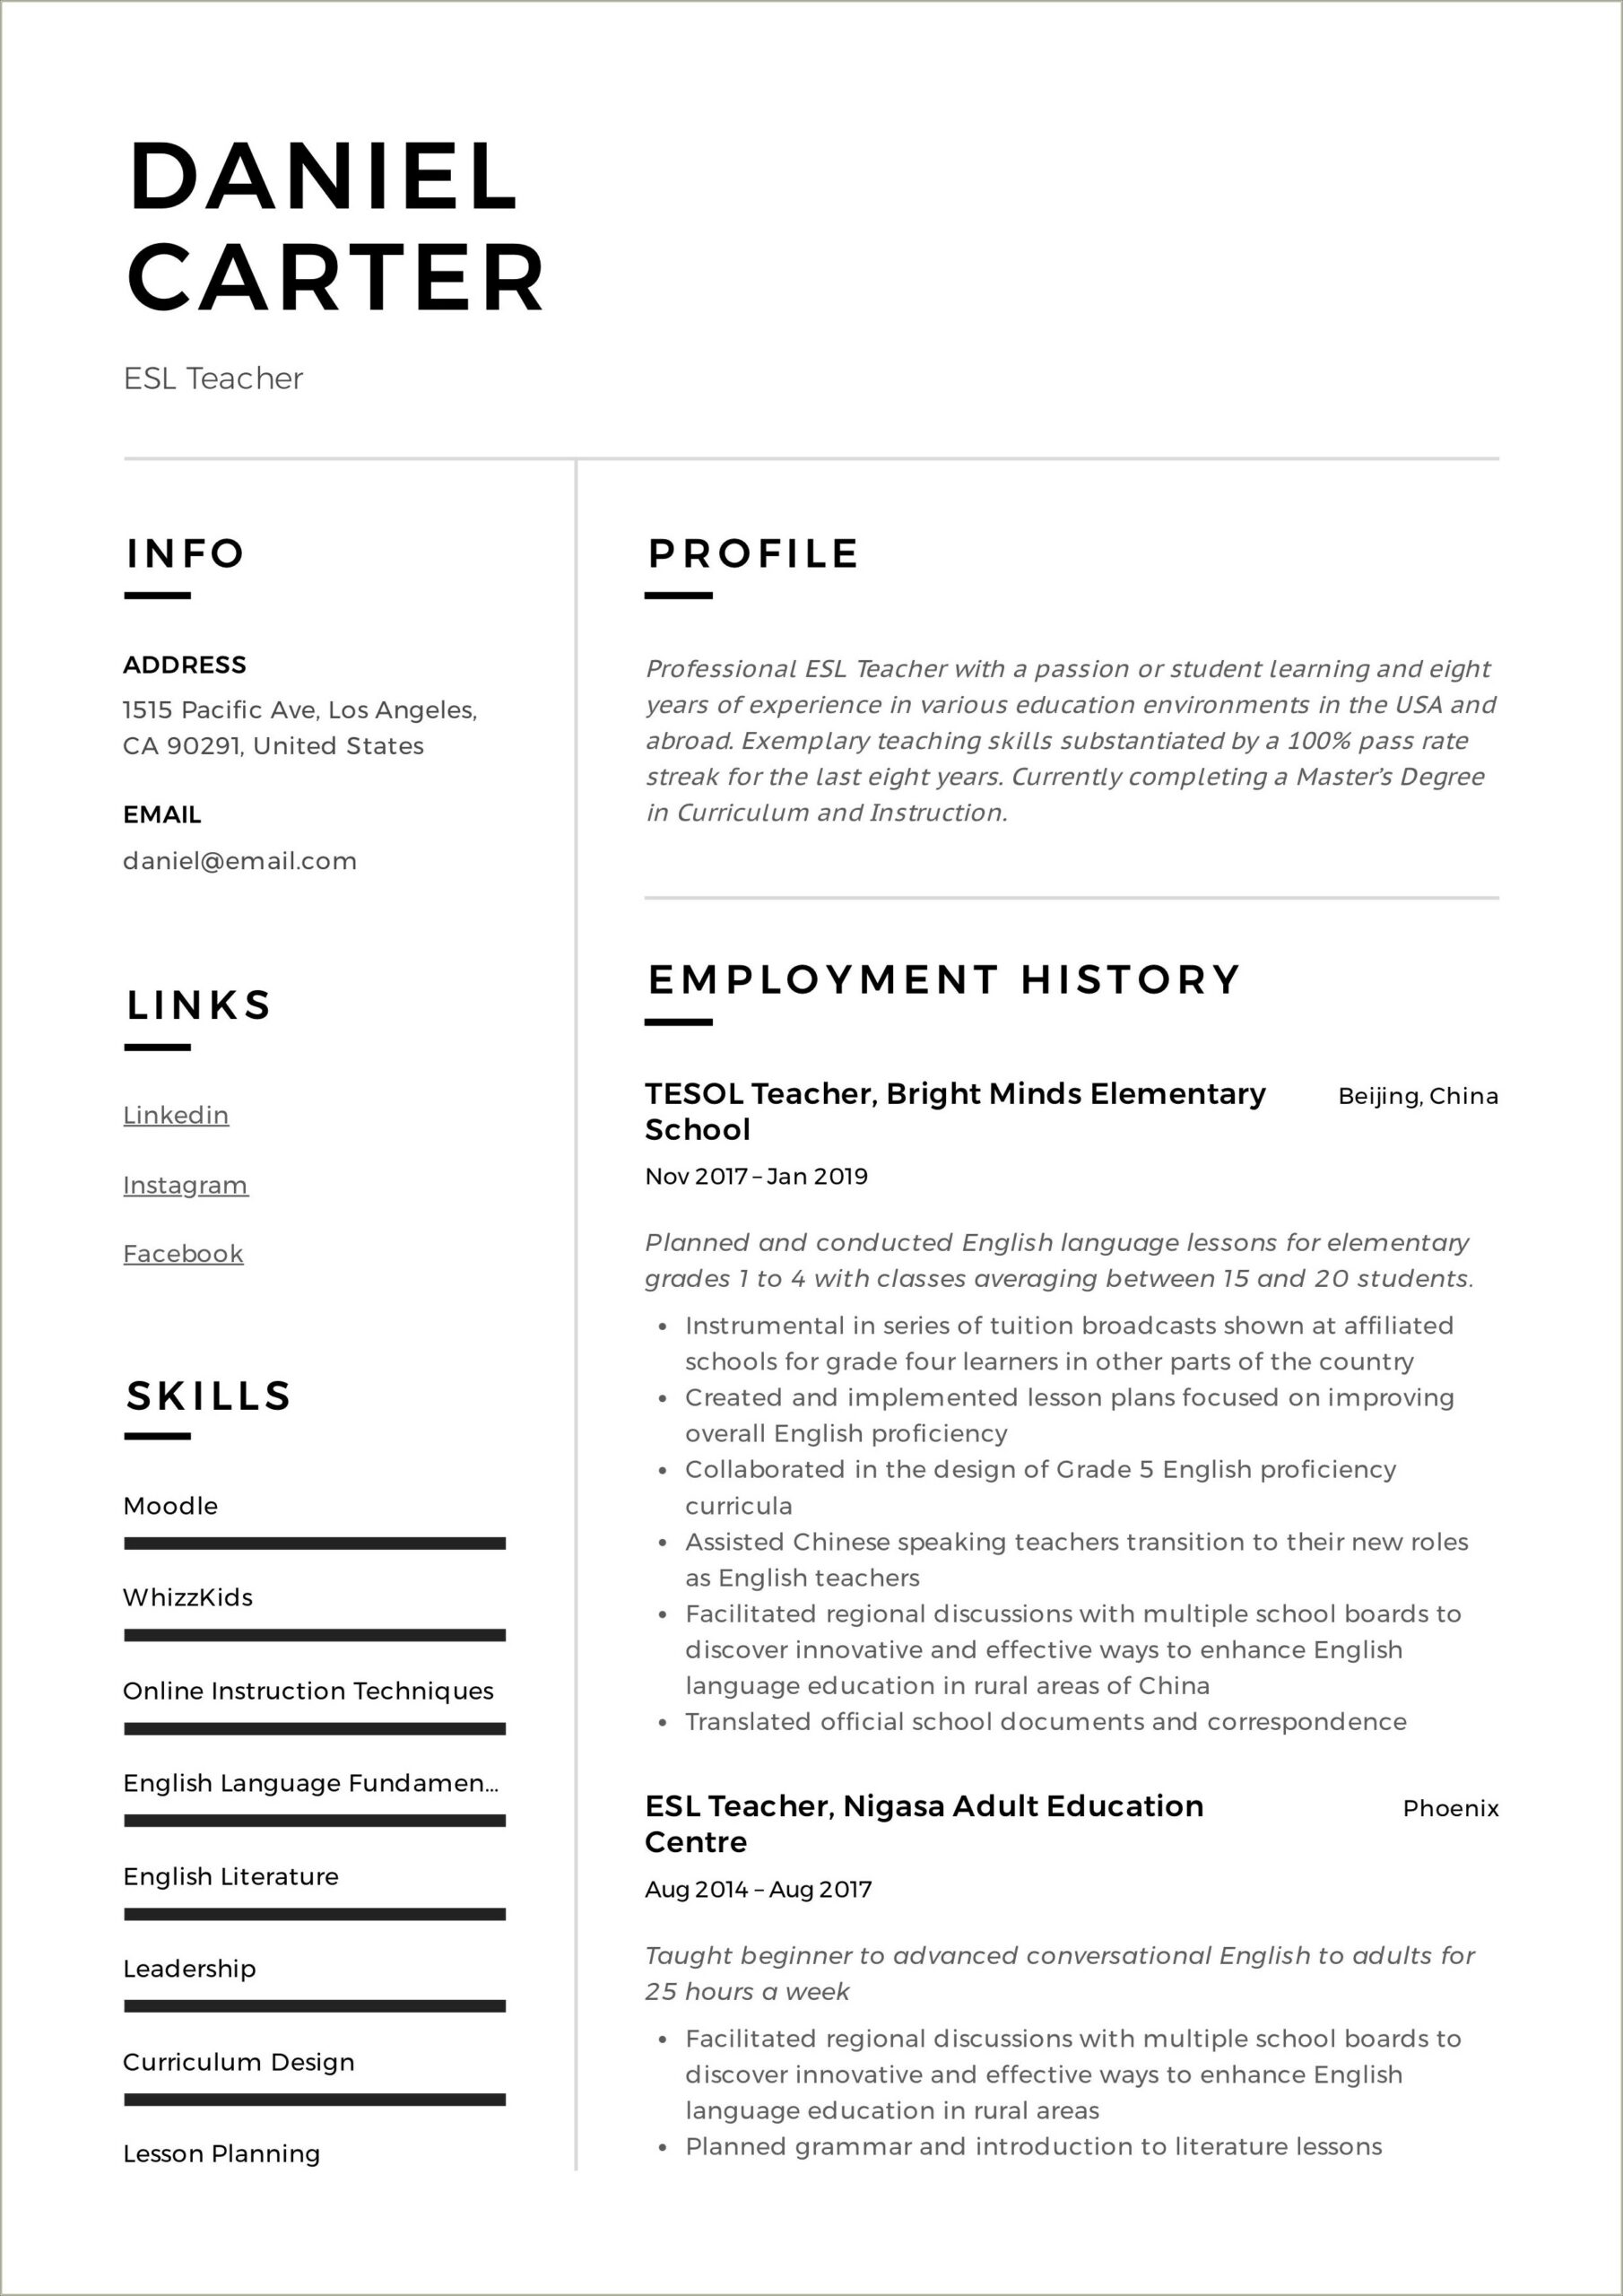 Carter's Job Description For Resume